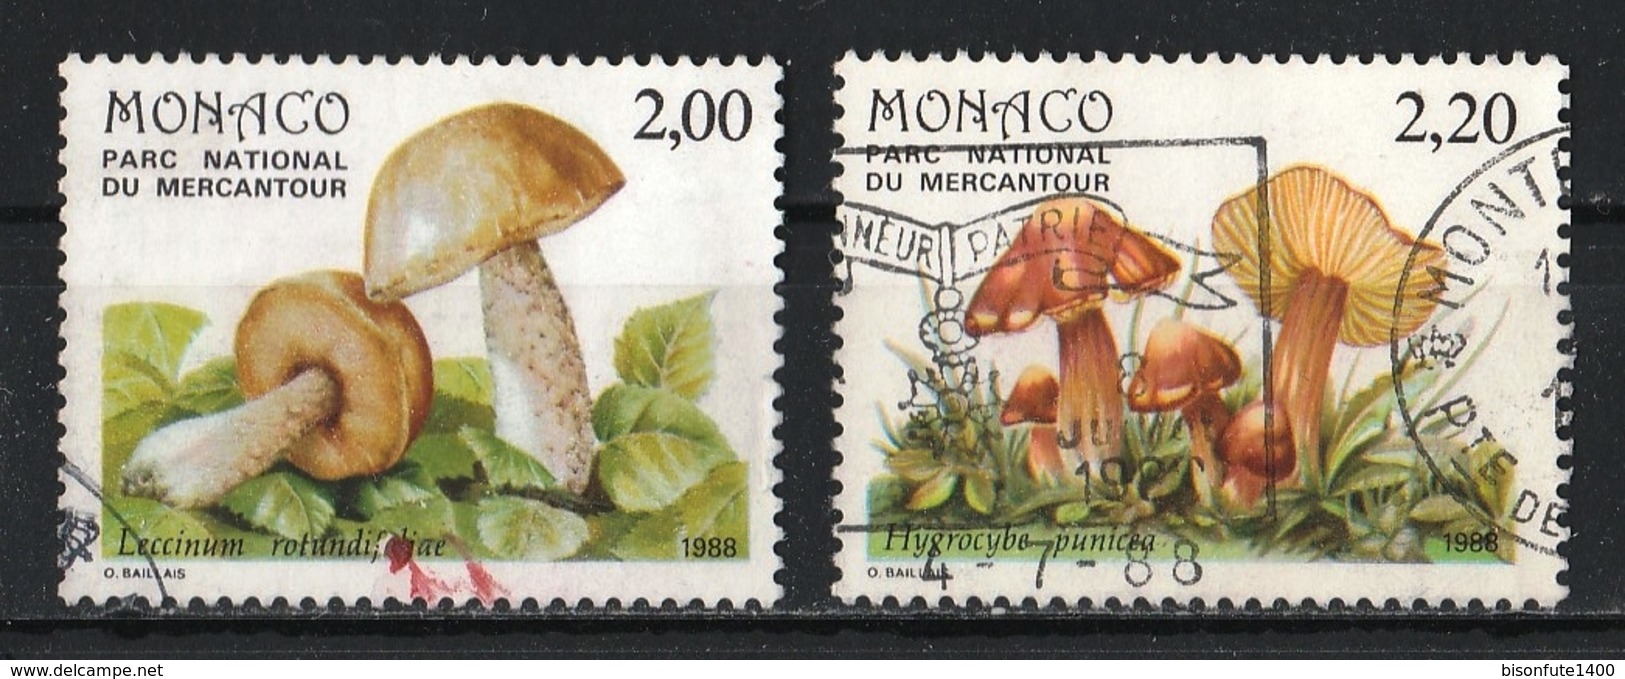 Monaco 1988 : Timbres Yvert & Tellier N° 1628 Et 1629. - Usados